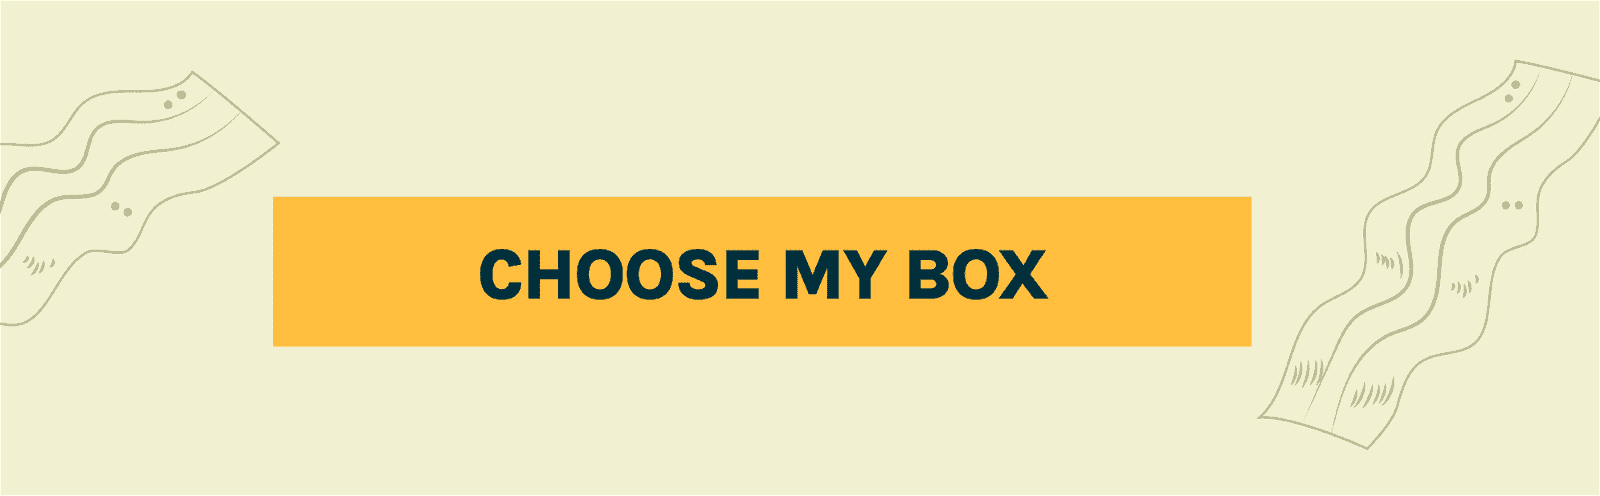 CHOOSE MY BOX